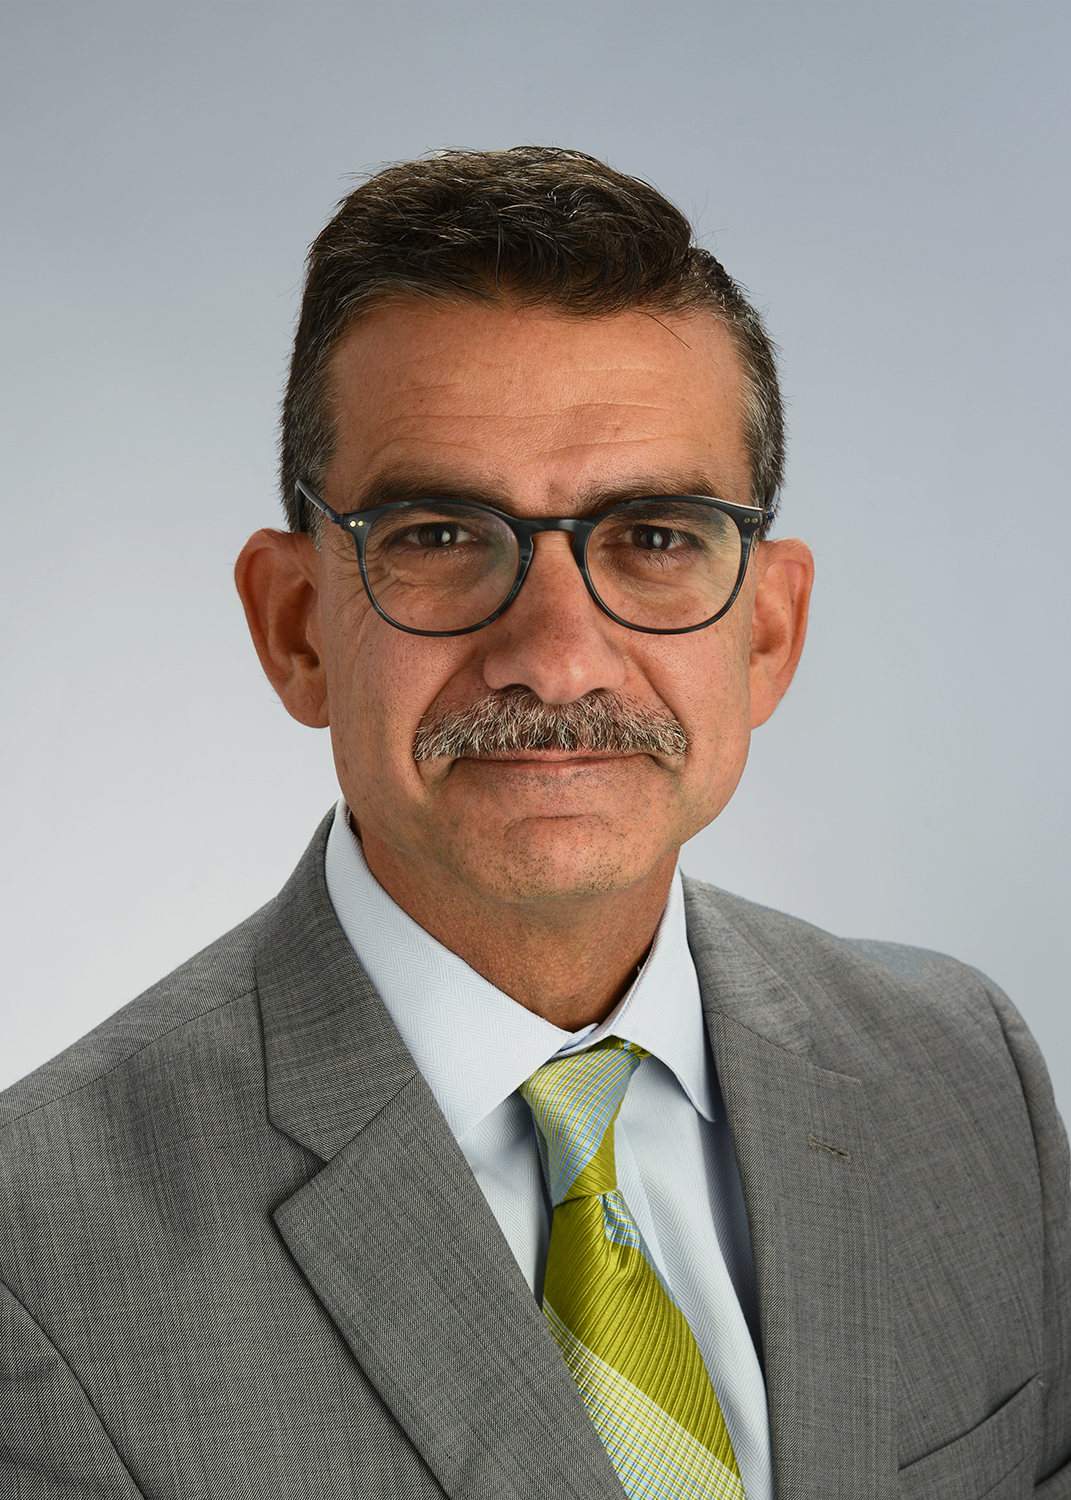 Dr. Mario Castro is a pulmonologist at the University of Kansas School of Medicine.